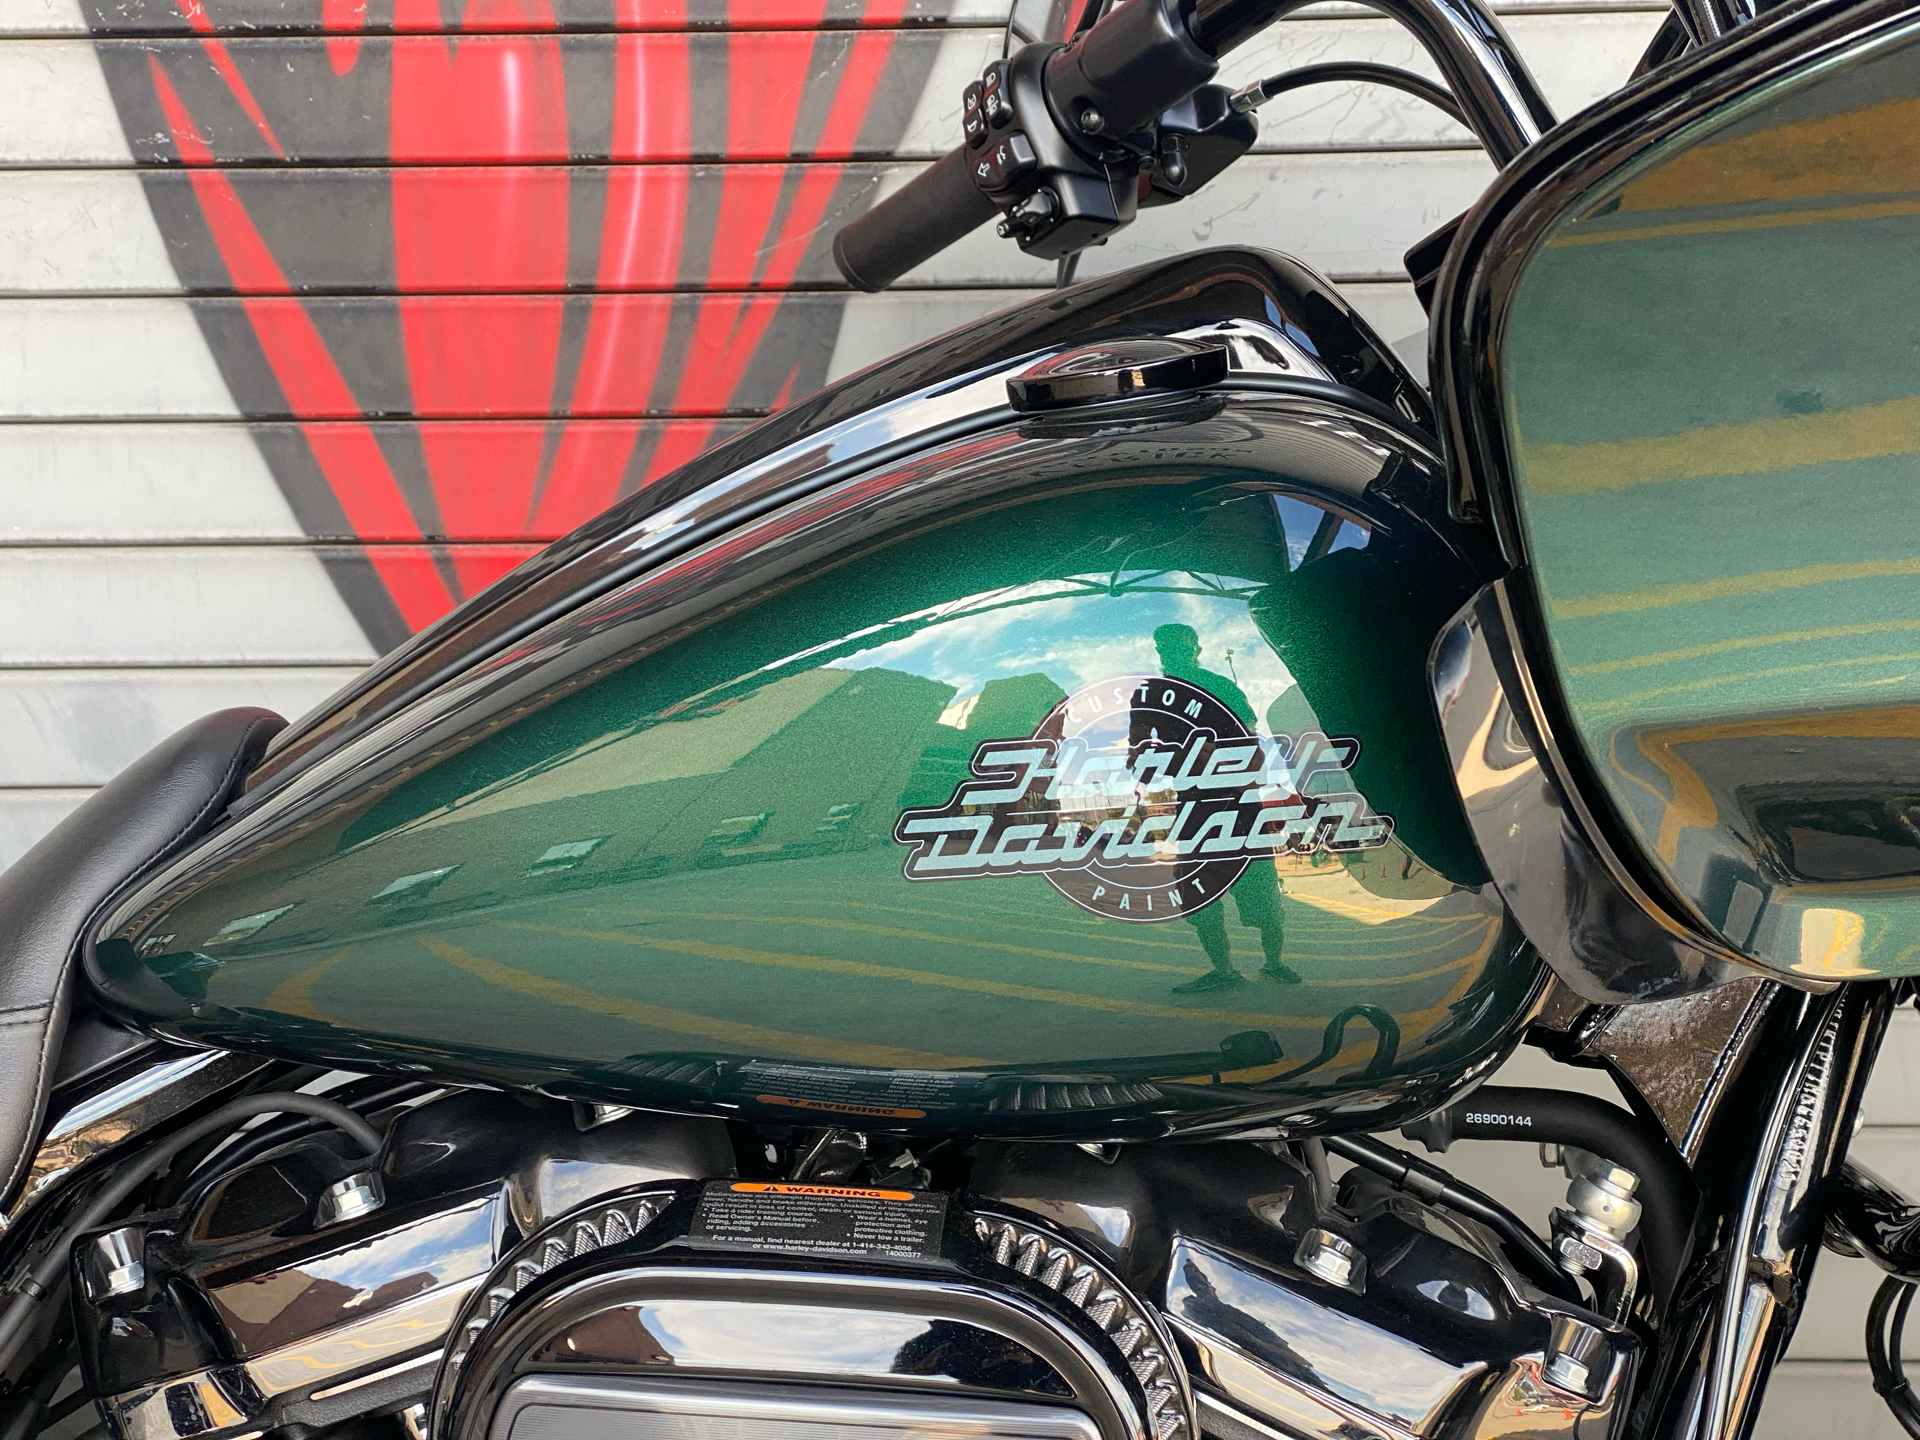 2021 Harley-Davidson Road Glide® Special in Carrollton, Texas - Photo 5